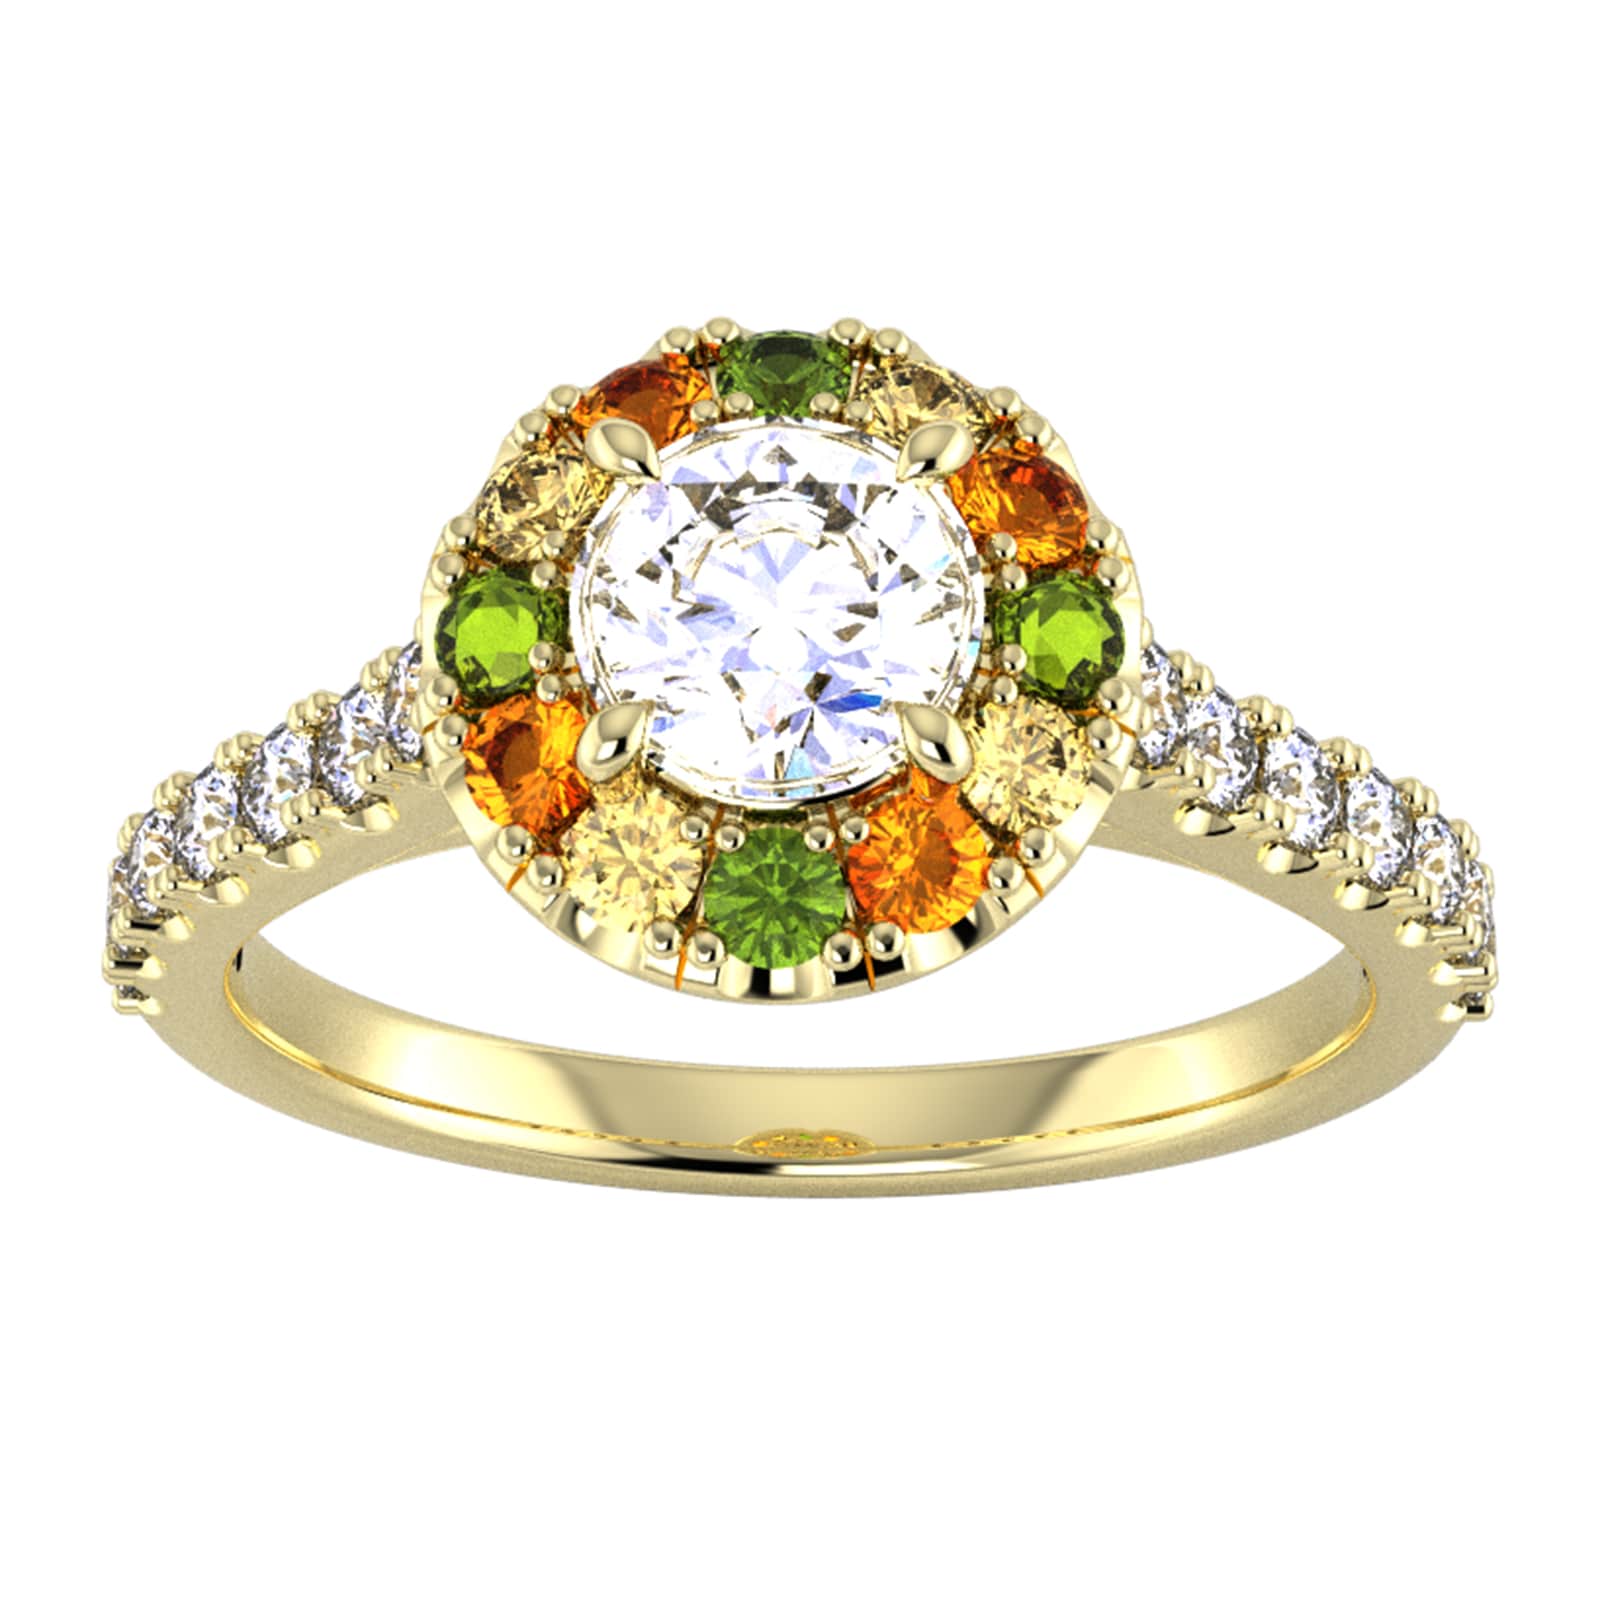 18ct Yellow Gold Diamond & Yellow, Orange, Green Sapphire Halo Ring - Ring Size C.5